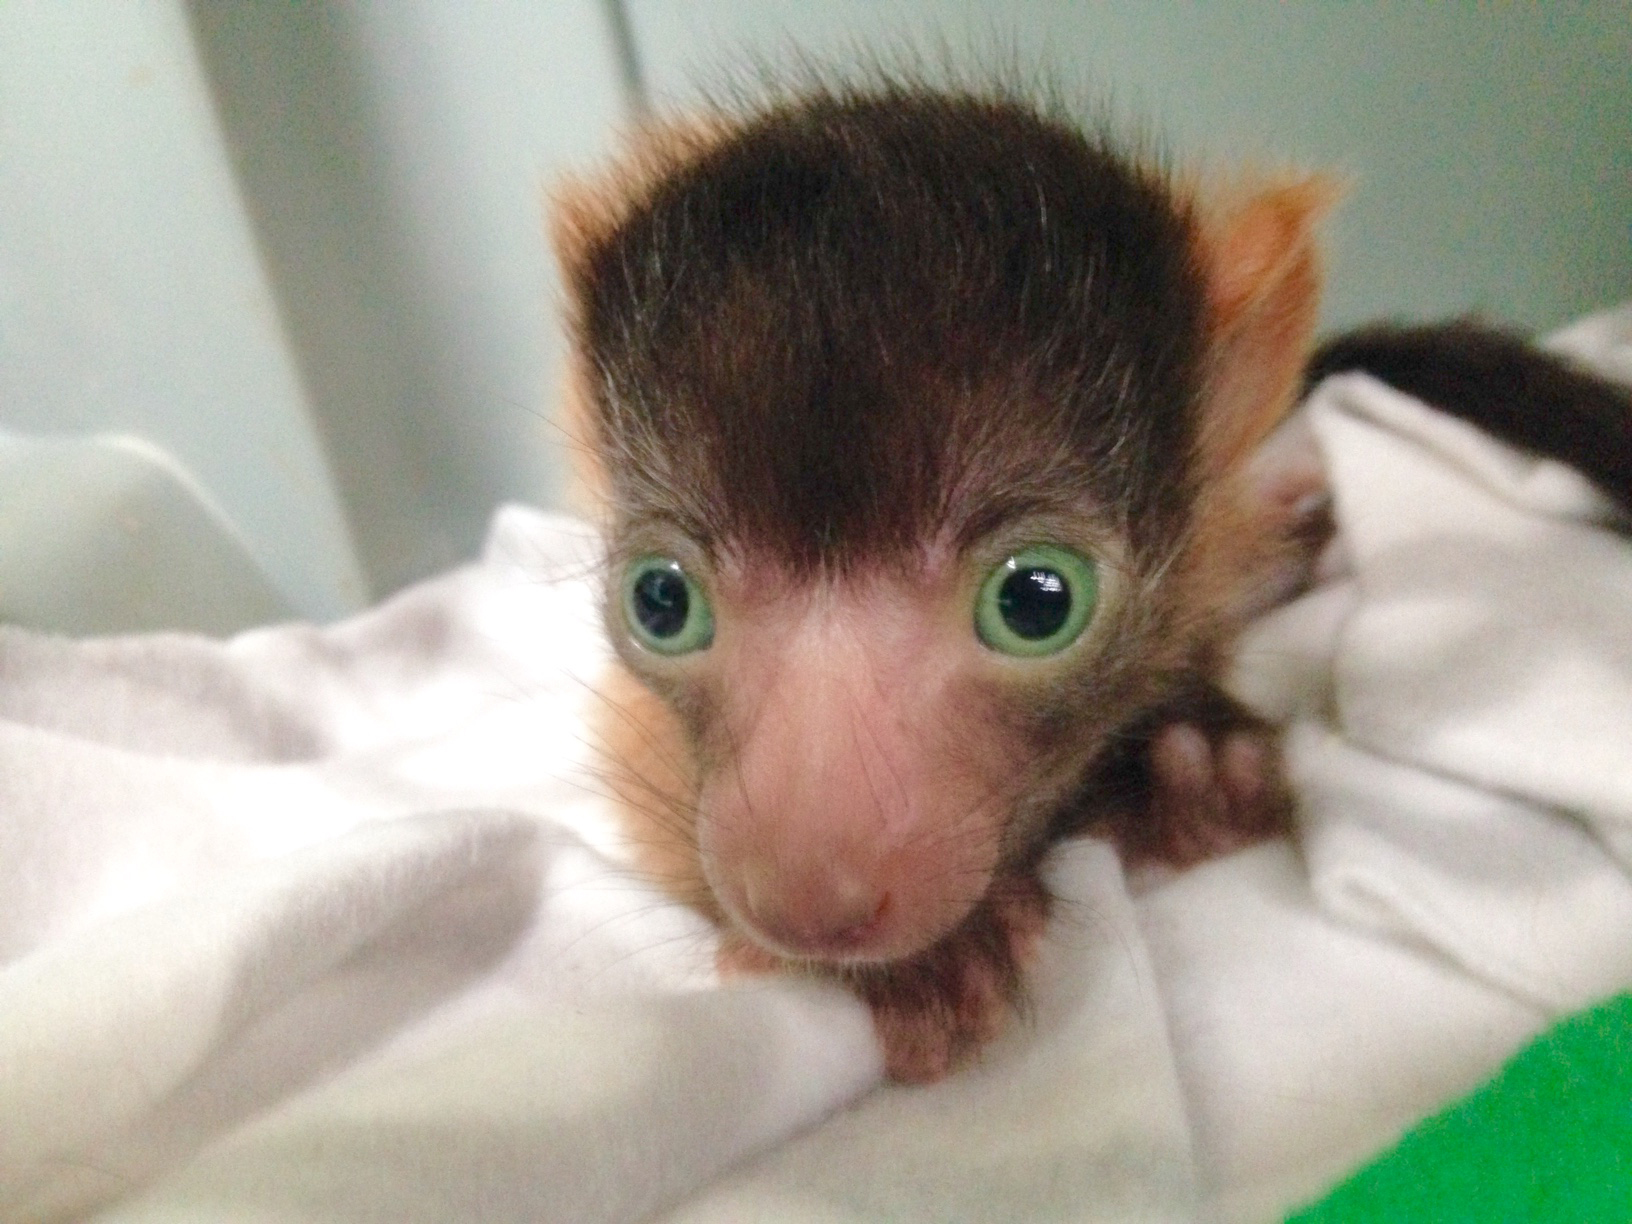 Baby Lemur